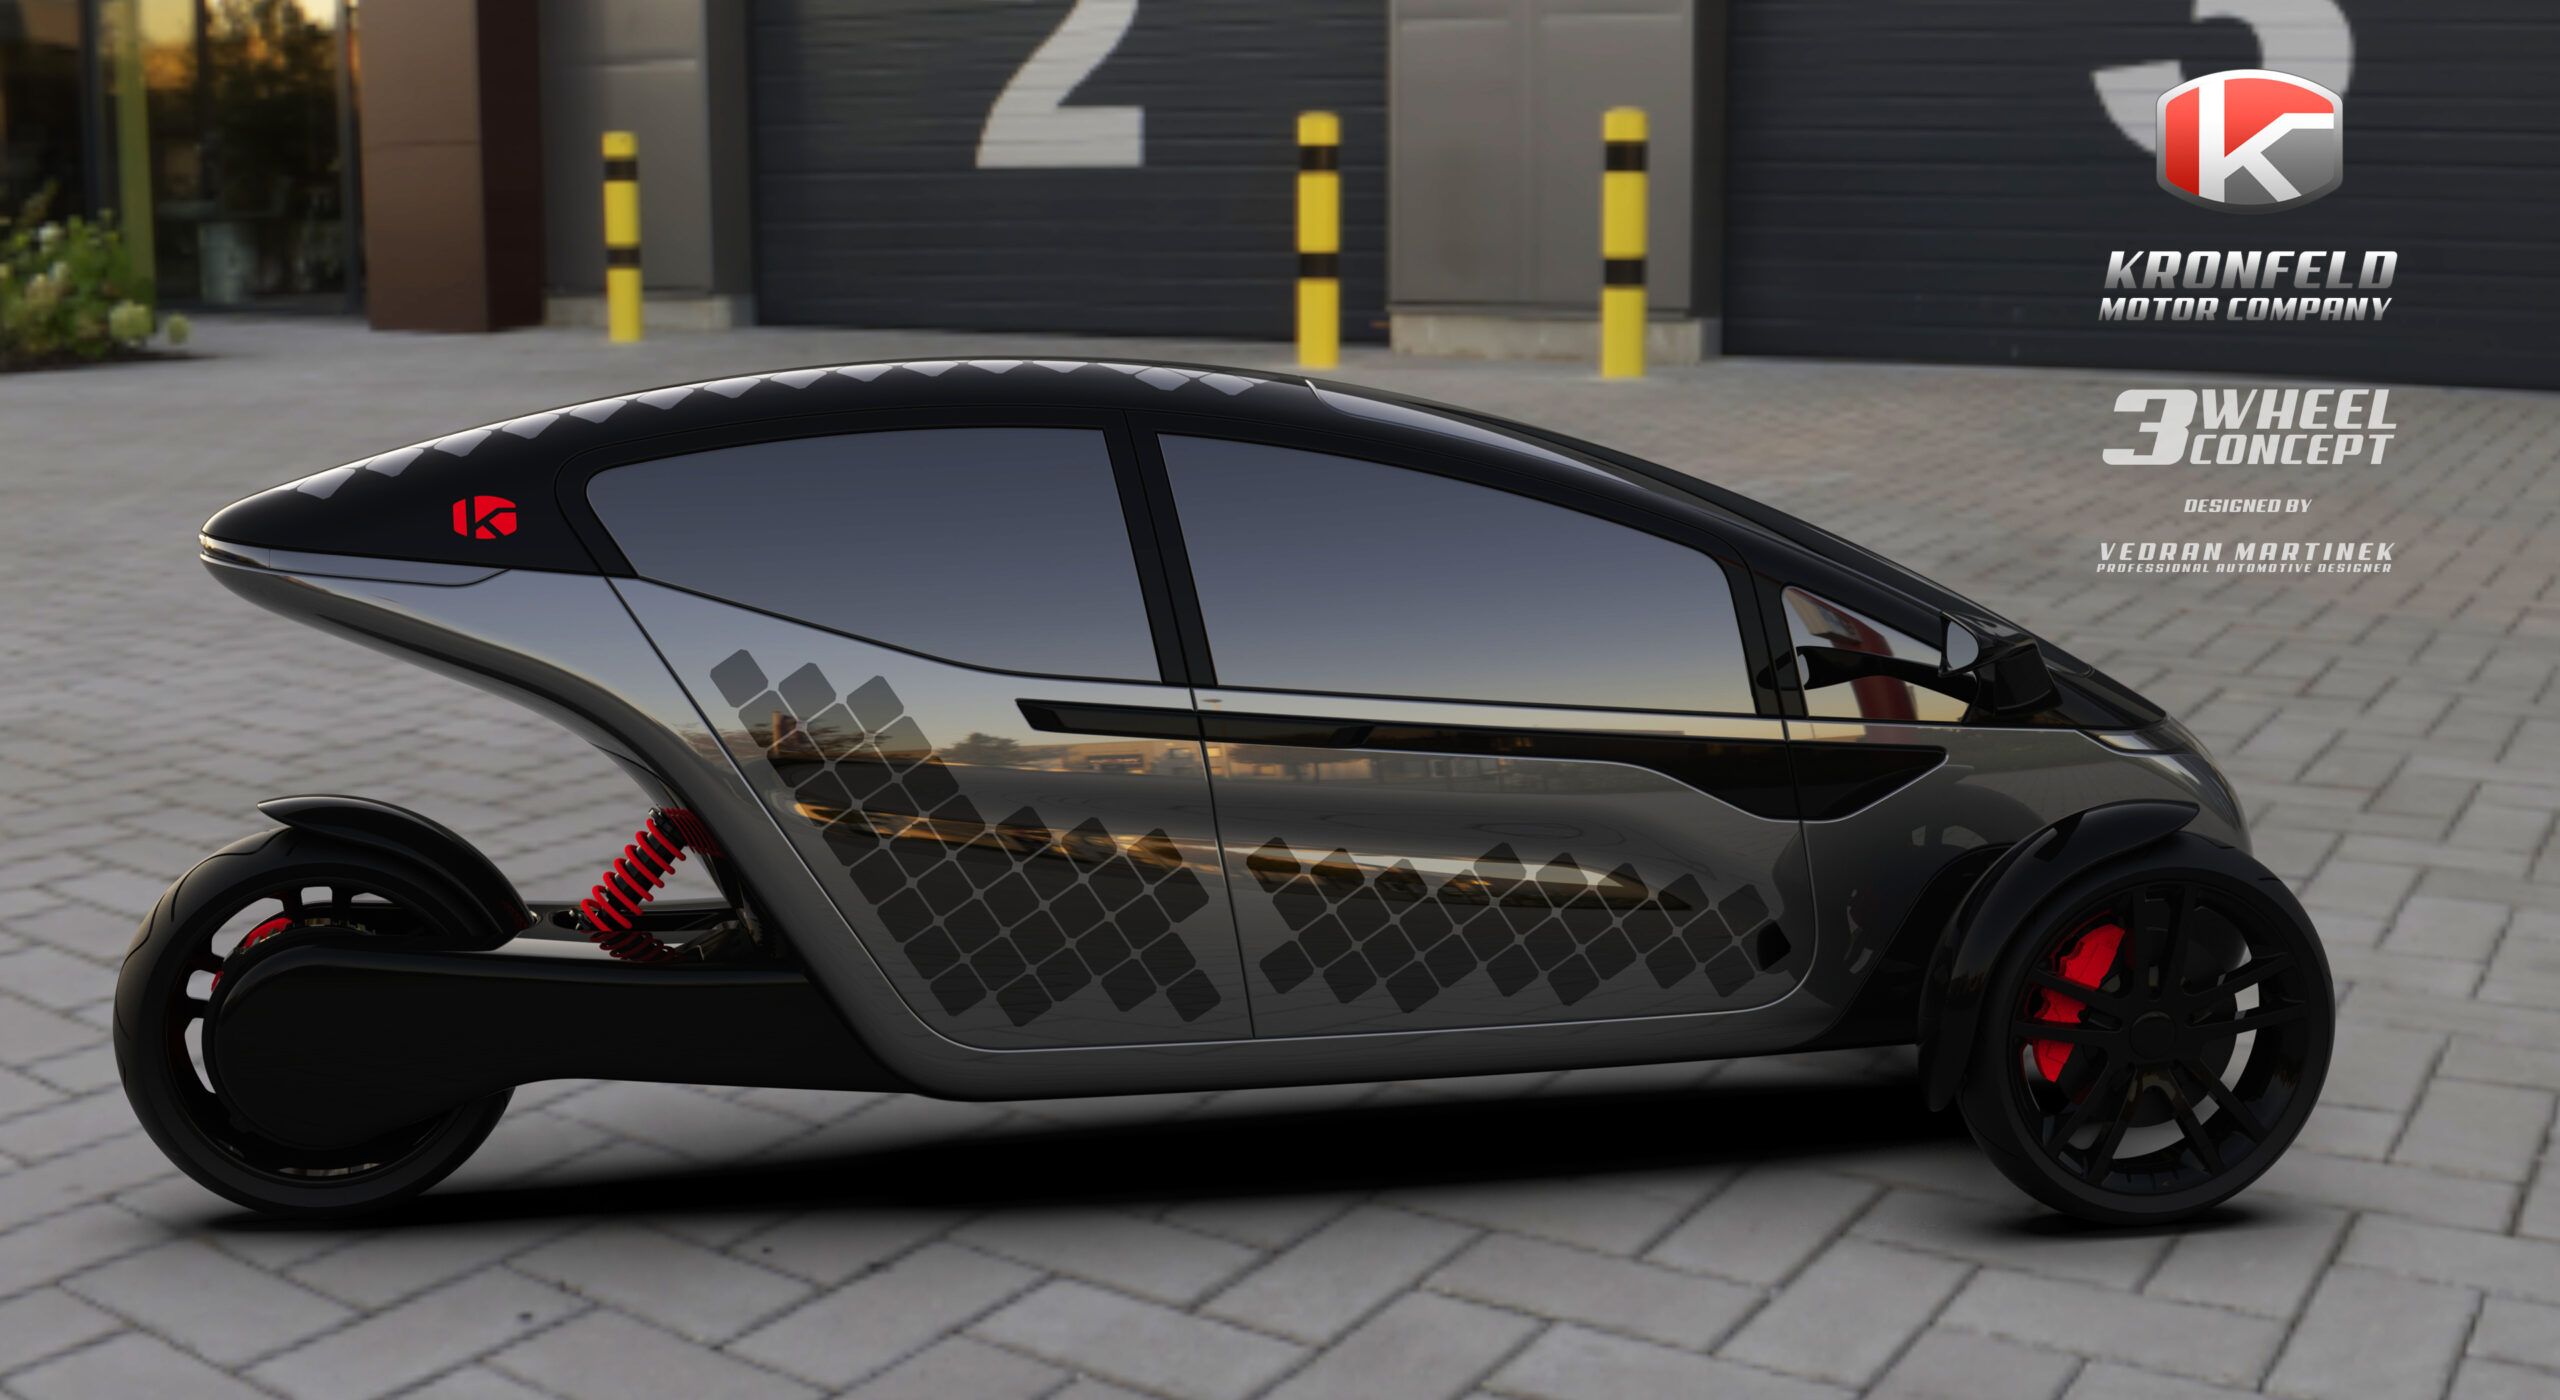 36_Kronfeld_Motors_3Wheel_Concept_Solar_Panel_Body-1-scaled.jpg
